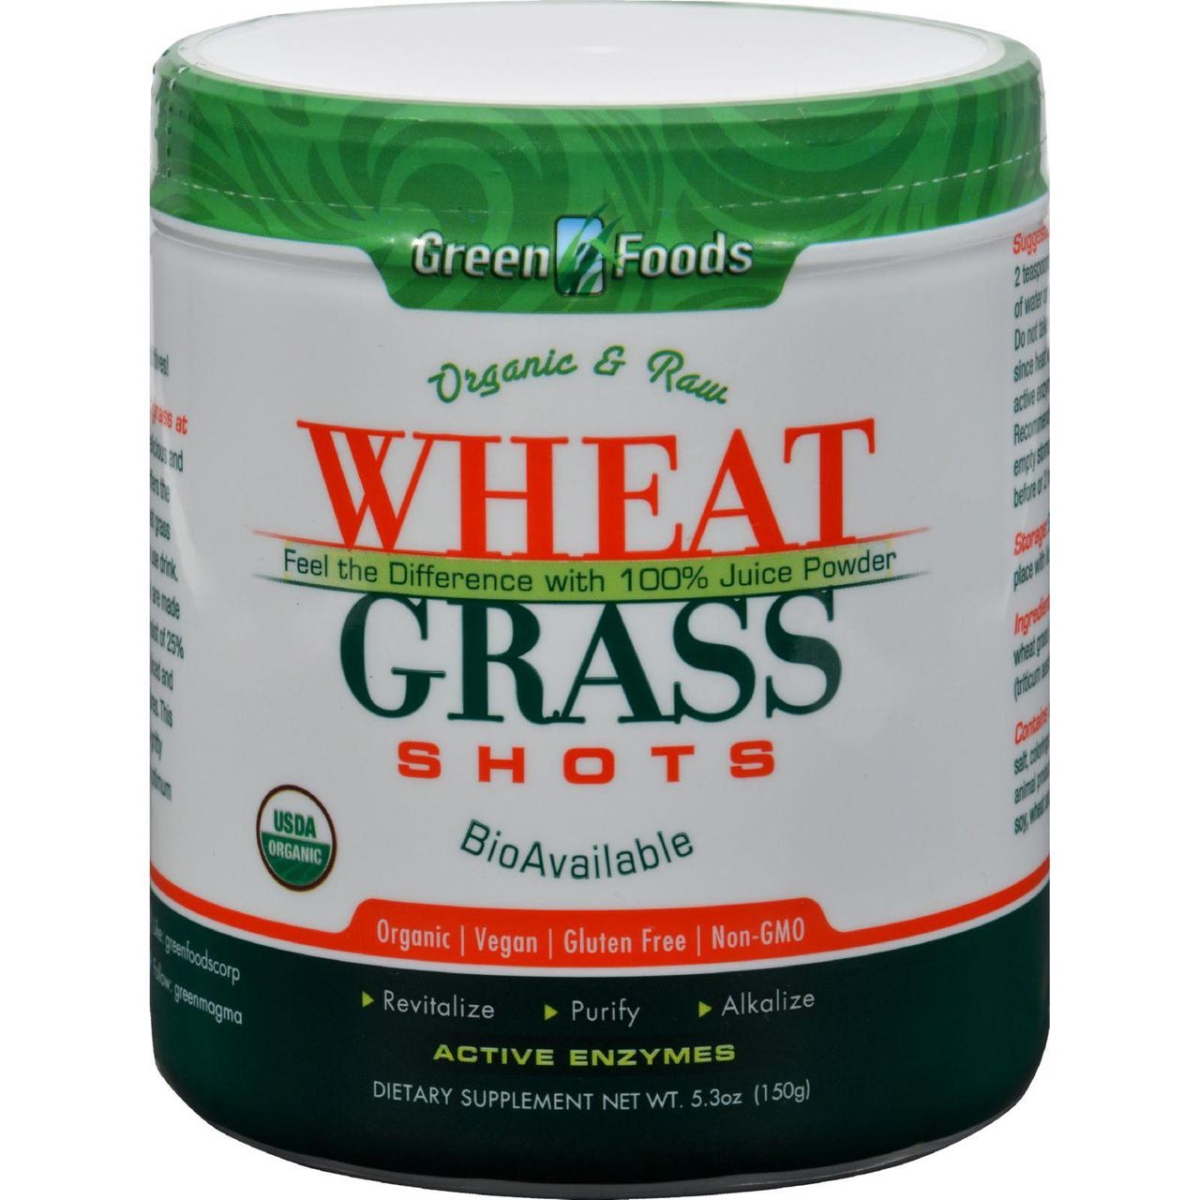 Hg1090109 5.3 Oz Organic & Raw Wheat Grass Shots